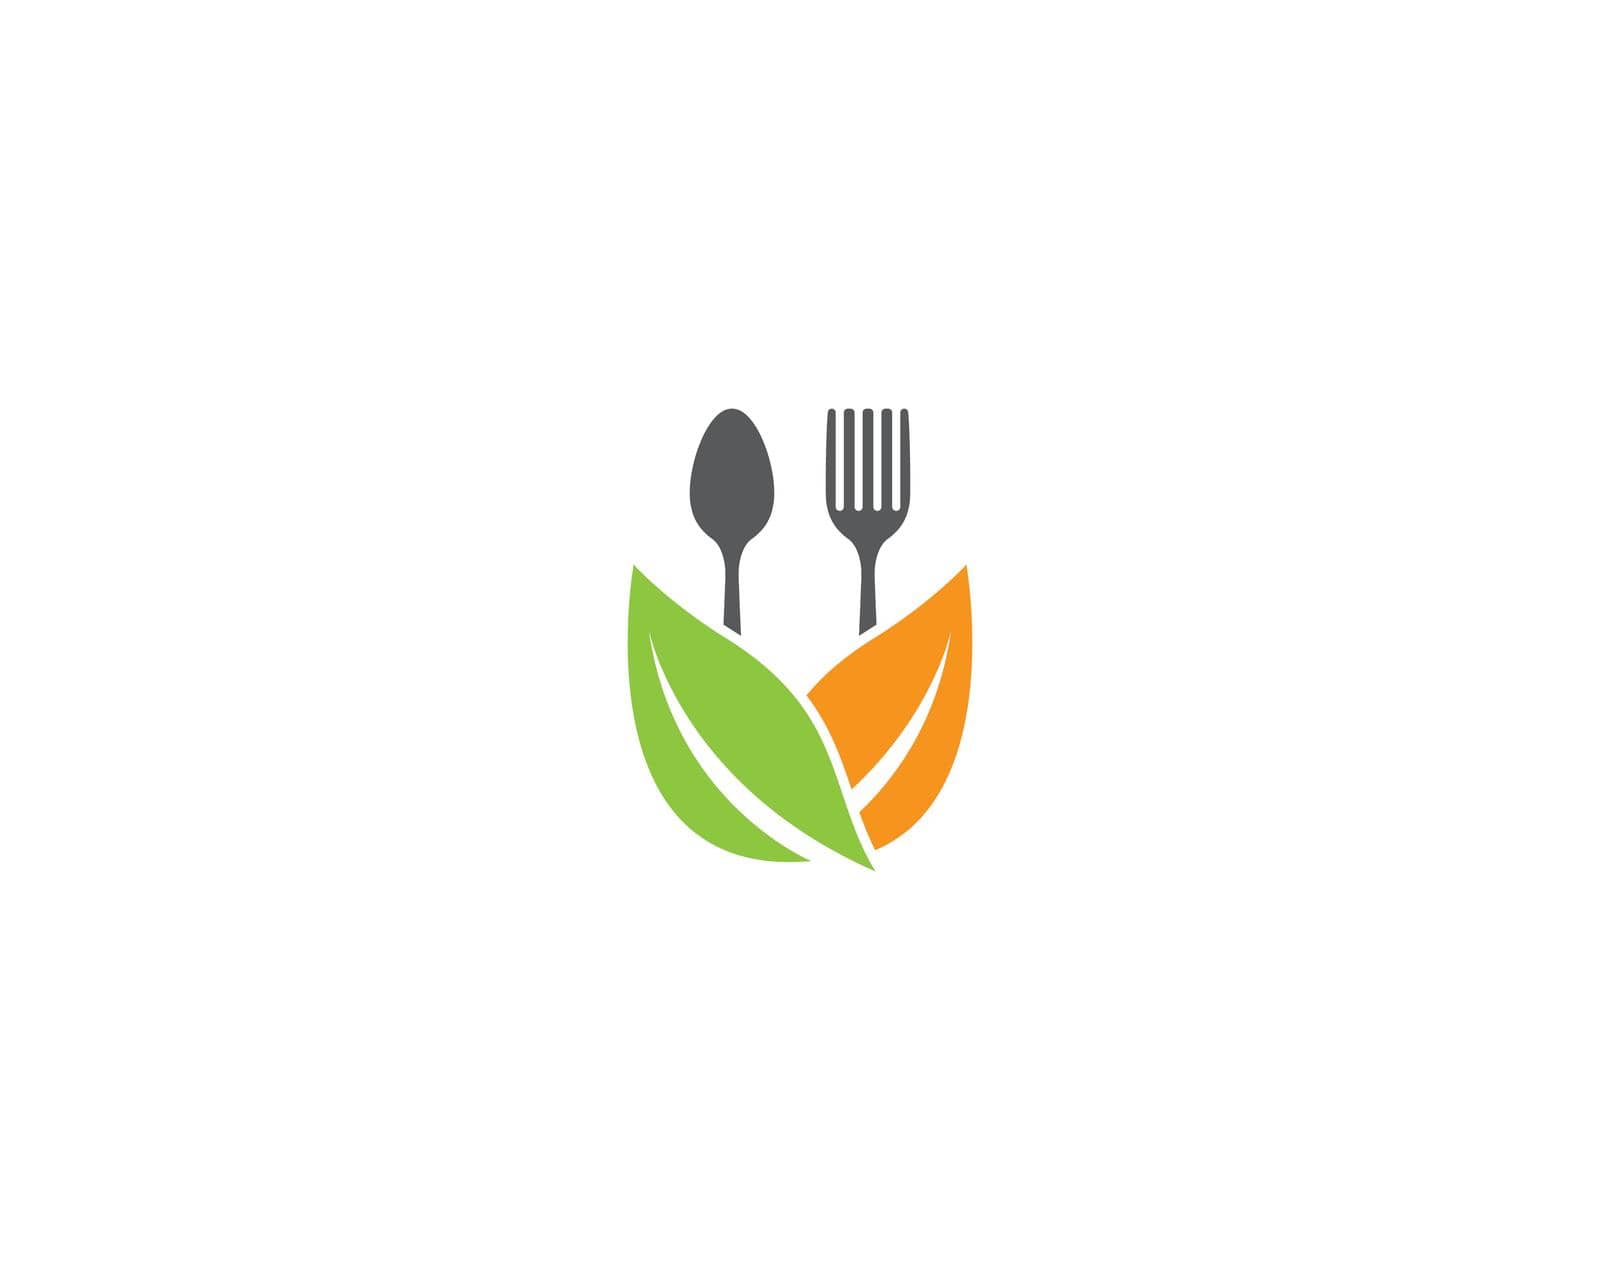 Organic food logo template by Attades19